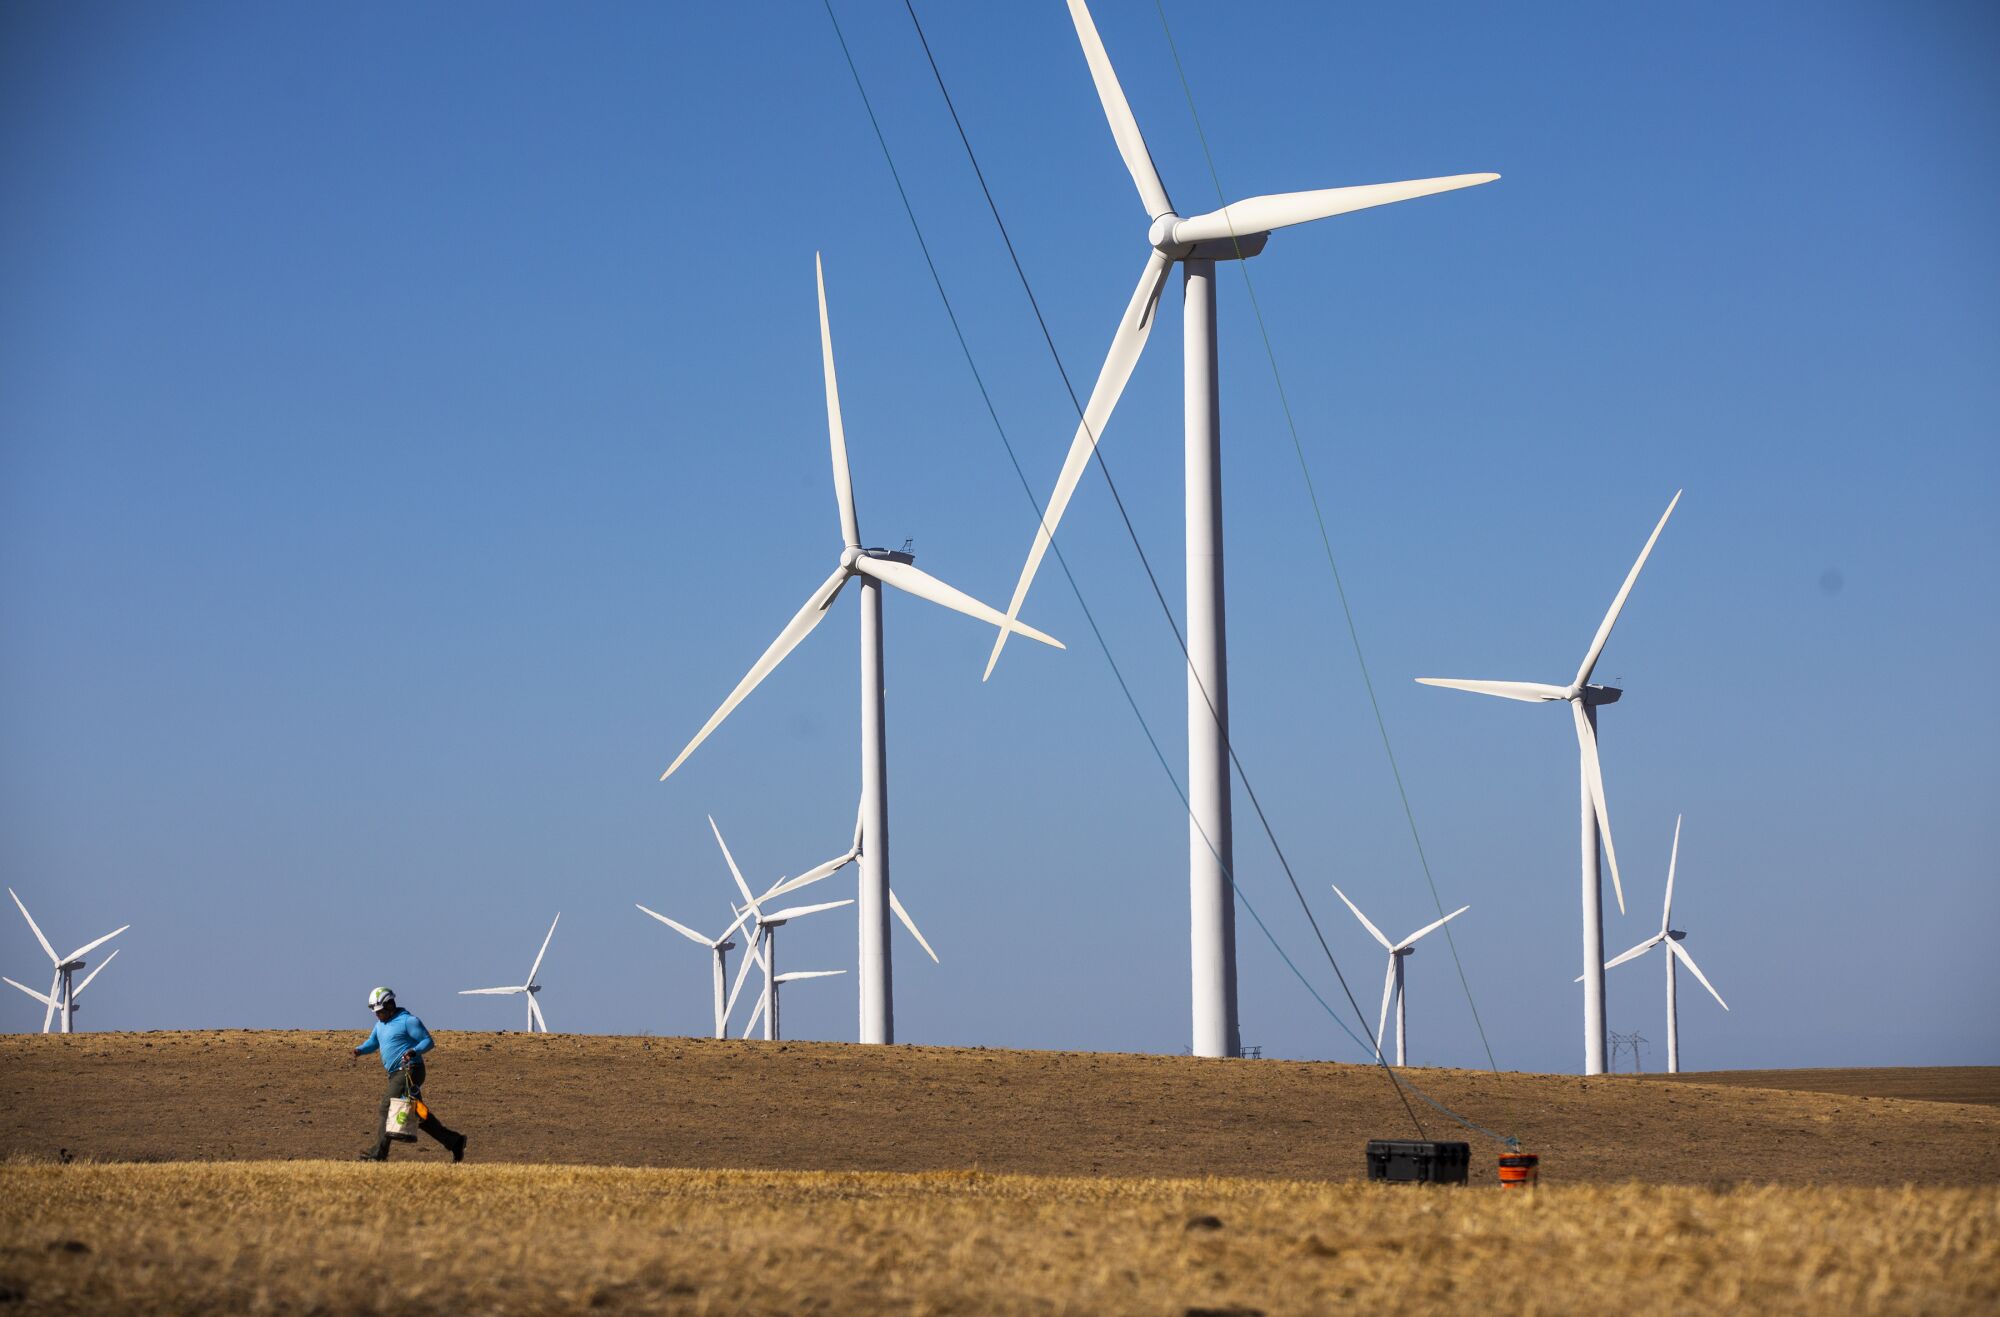 A person runs among wind turbines.